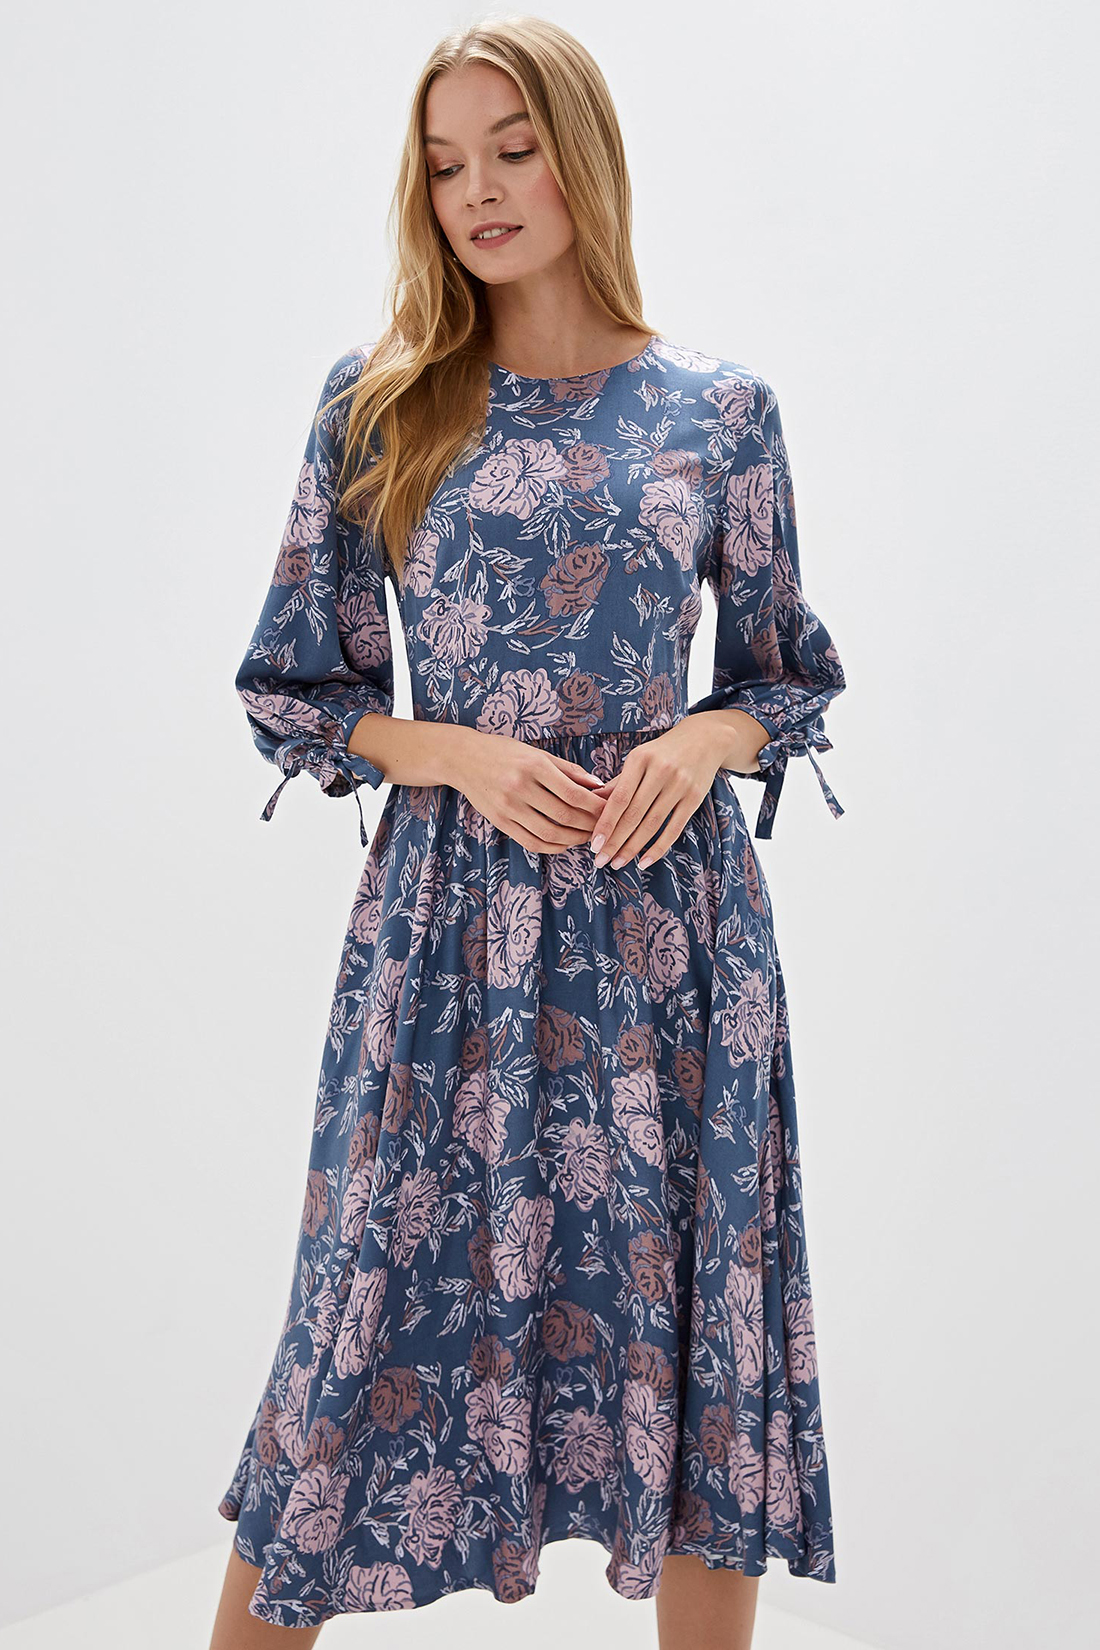 Платье с узором из роз (арт. baon B459509), размер S, цвет night shark printed#синий Платье с узором из роз (арт. baon B459509) - фото 3